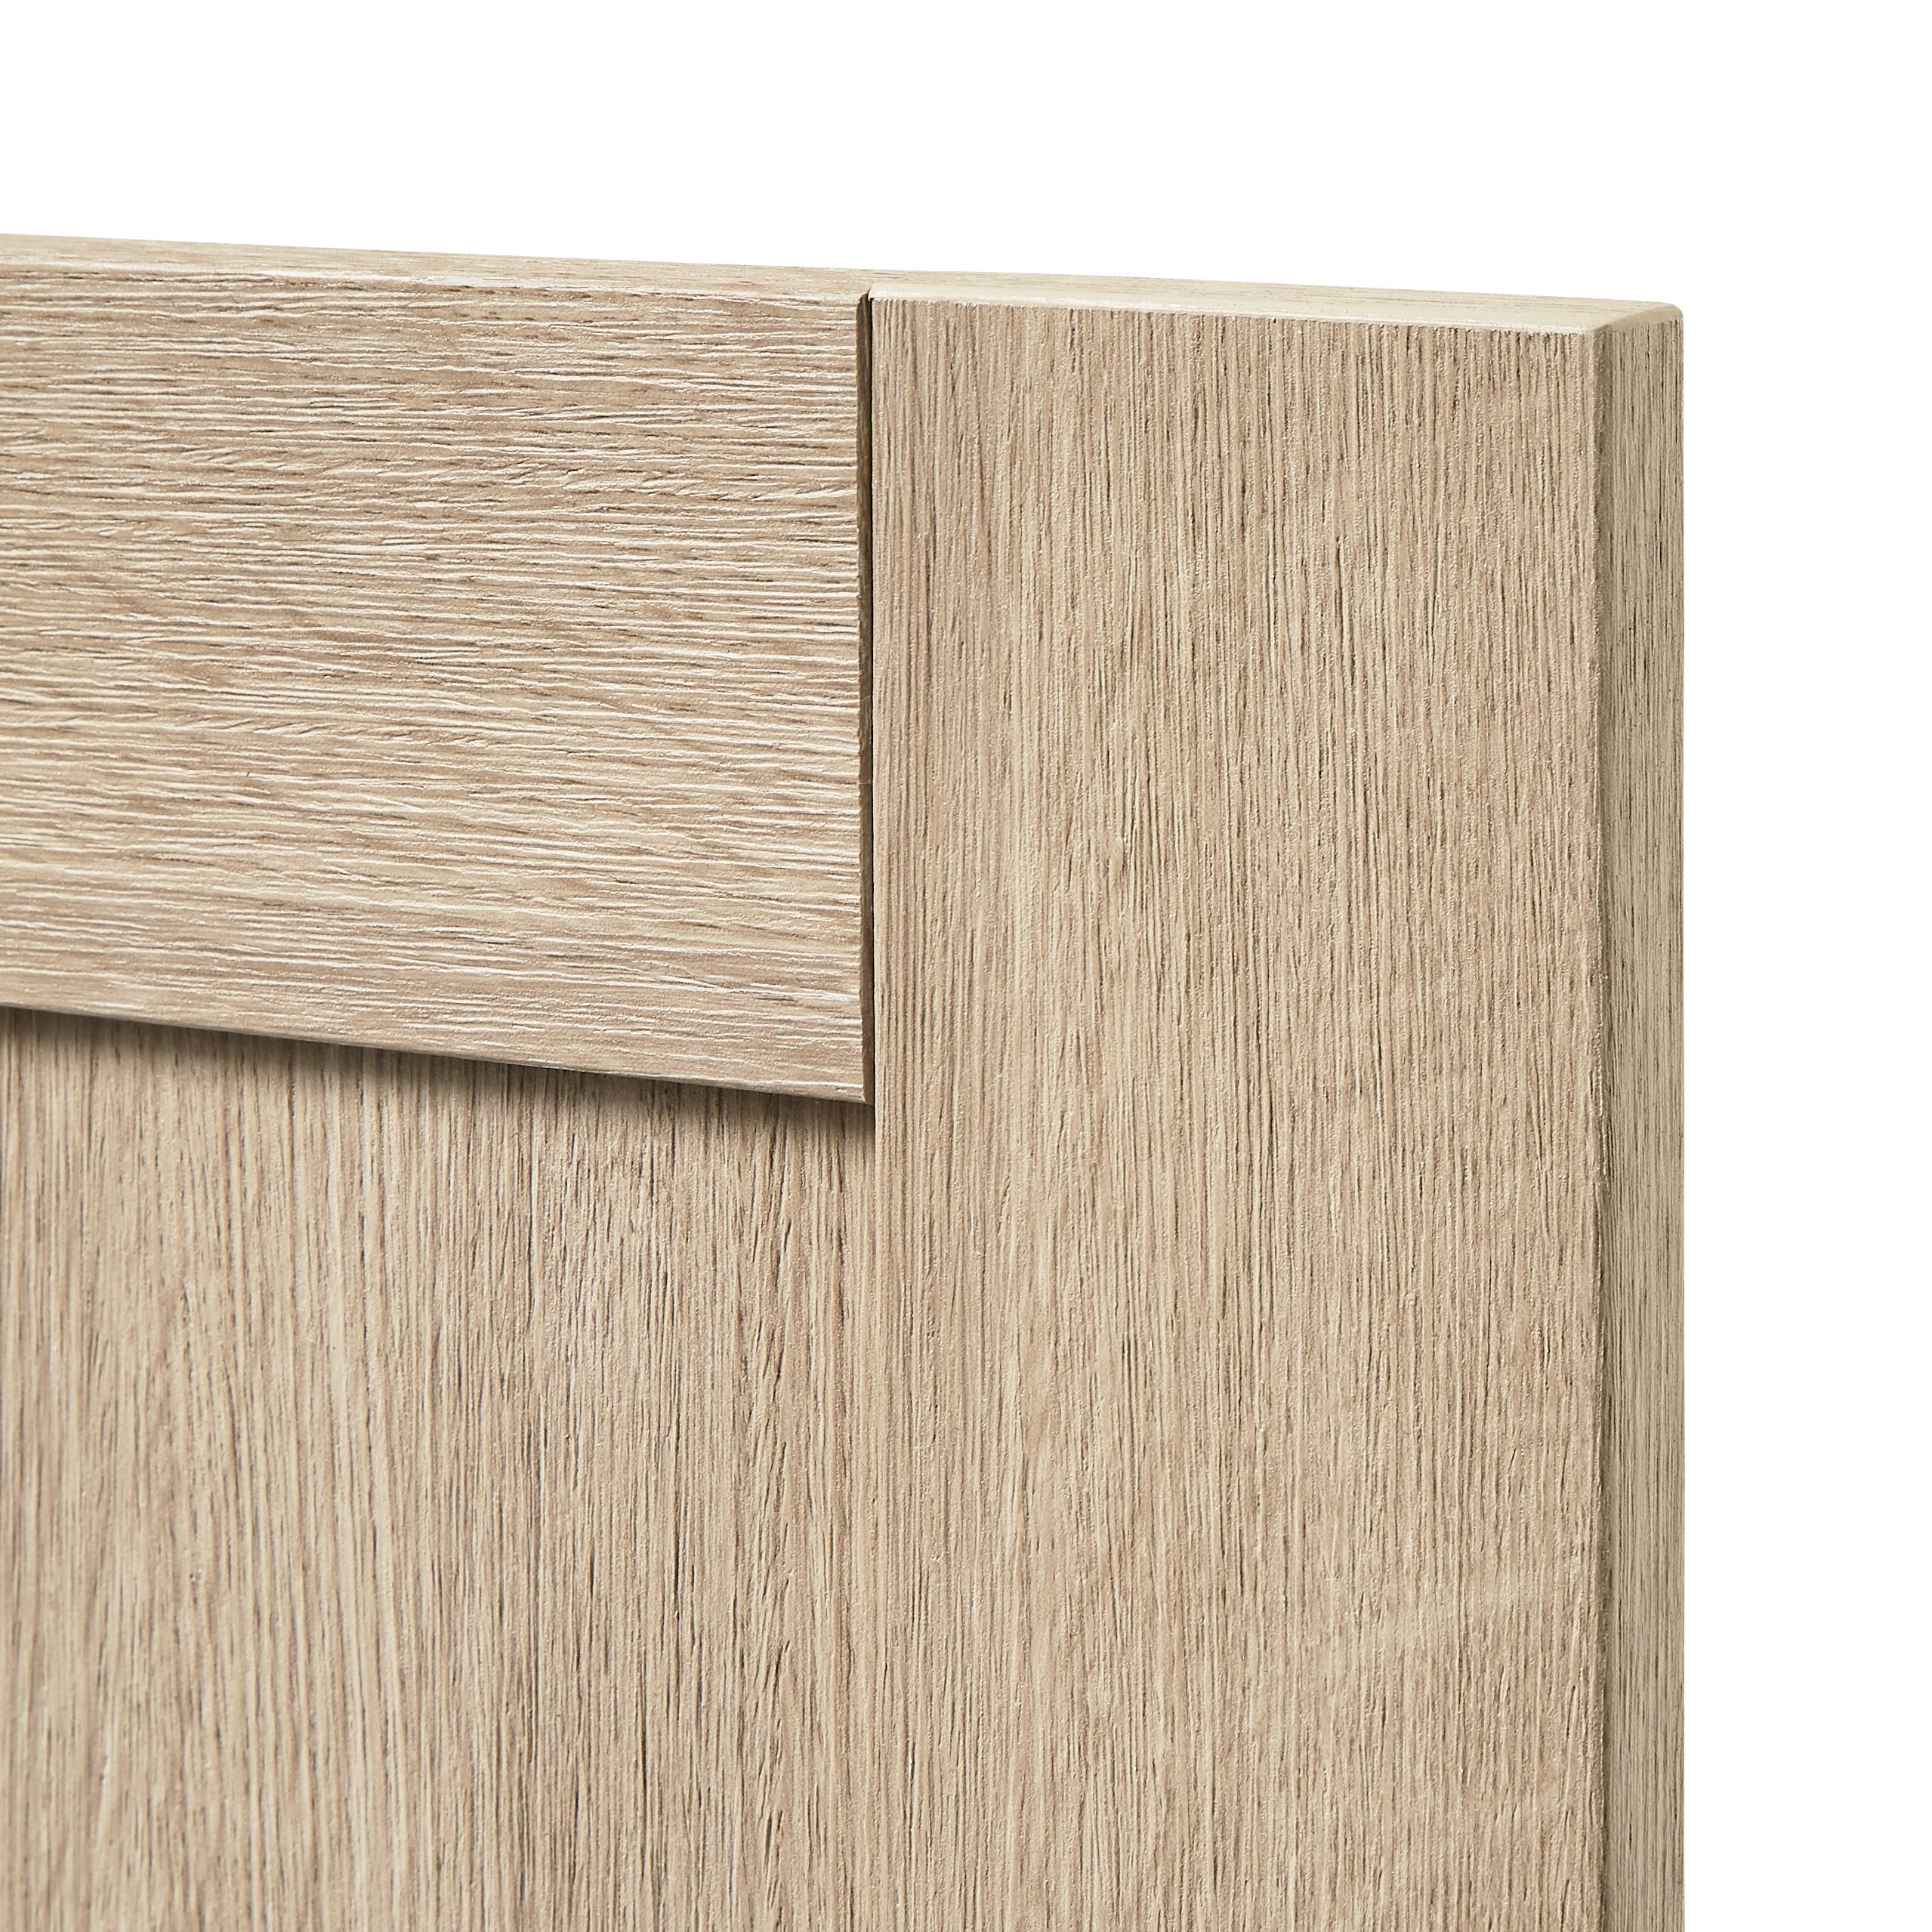 GoodHome Alpinia Oak effect shaker Tall larder Cabinet door (W)600mm (H)1467mm (T)18mm